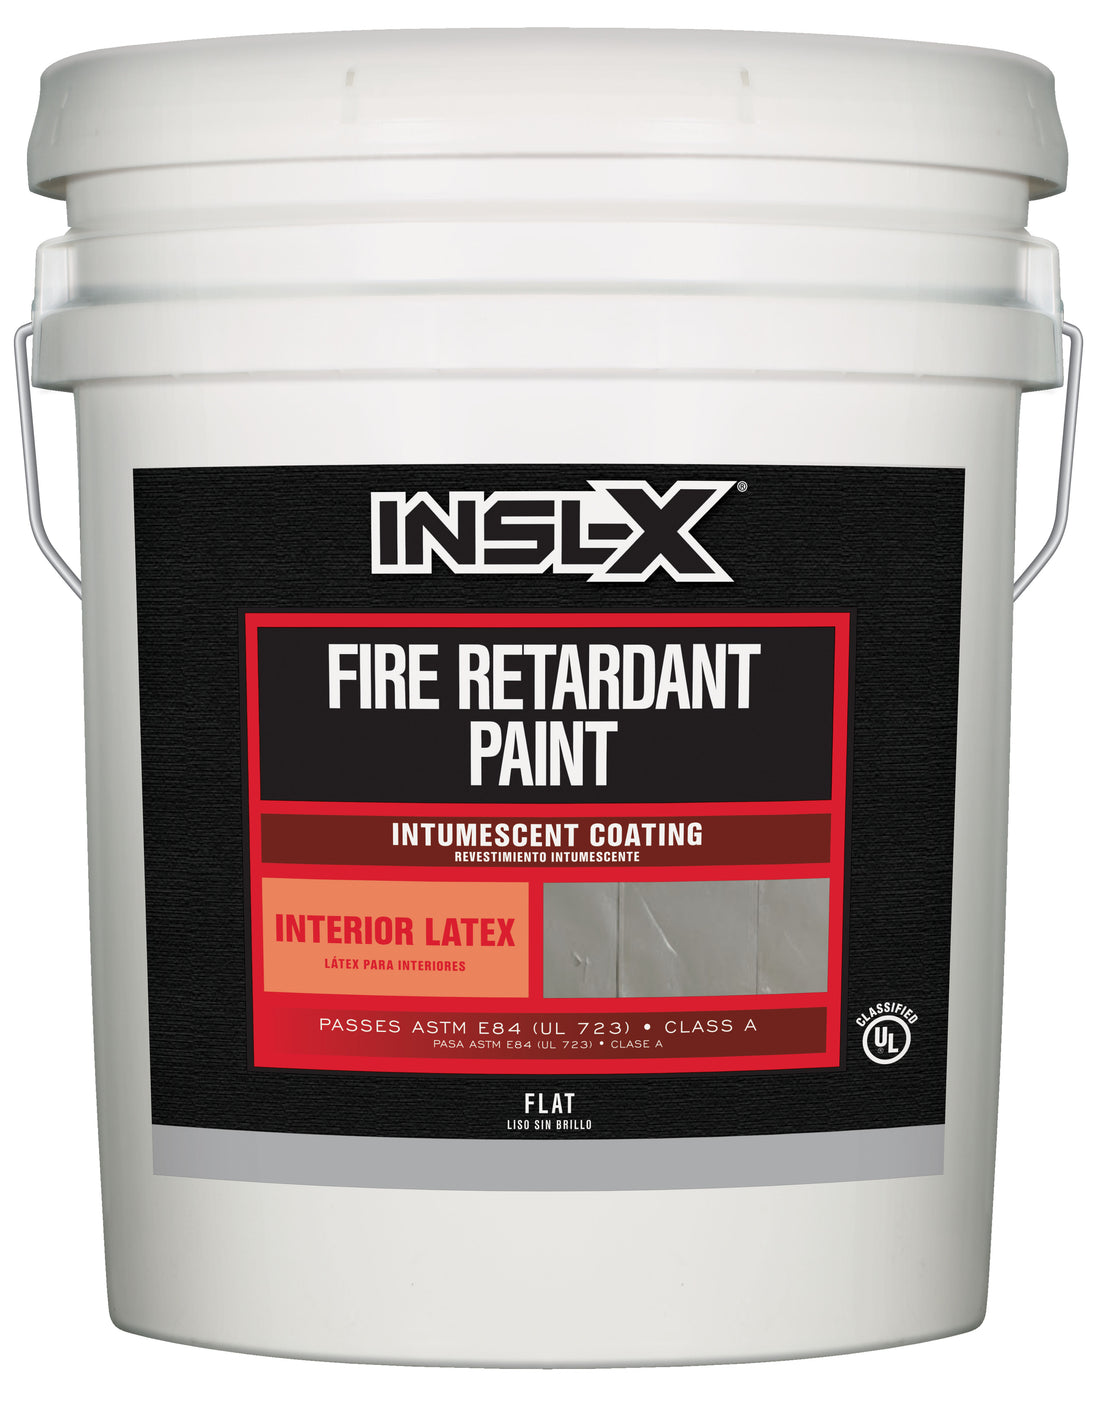 INSL-X FIRE RETARDENT